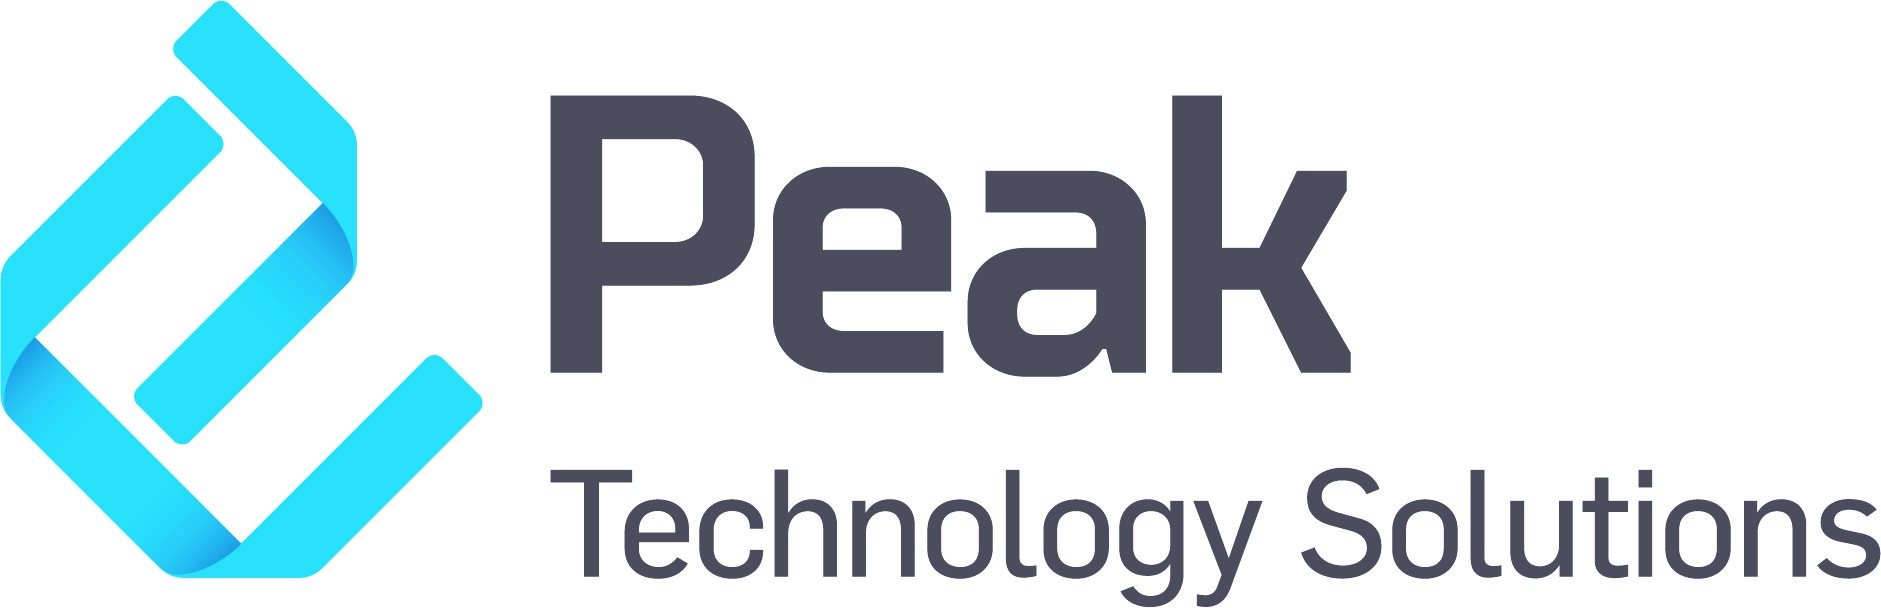 Peak Technology Solutions Logo